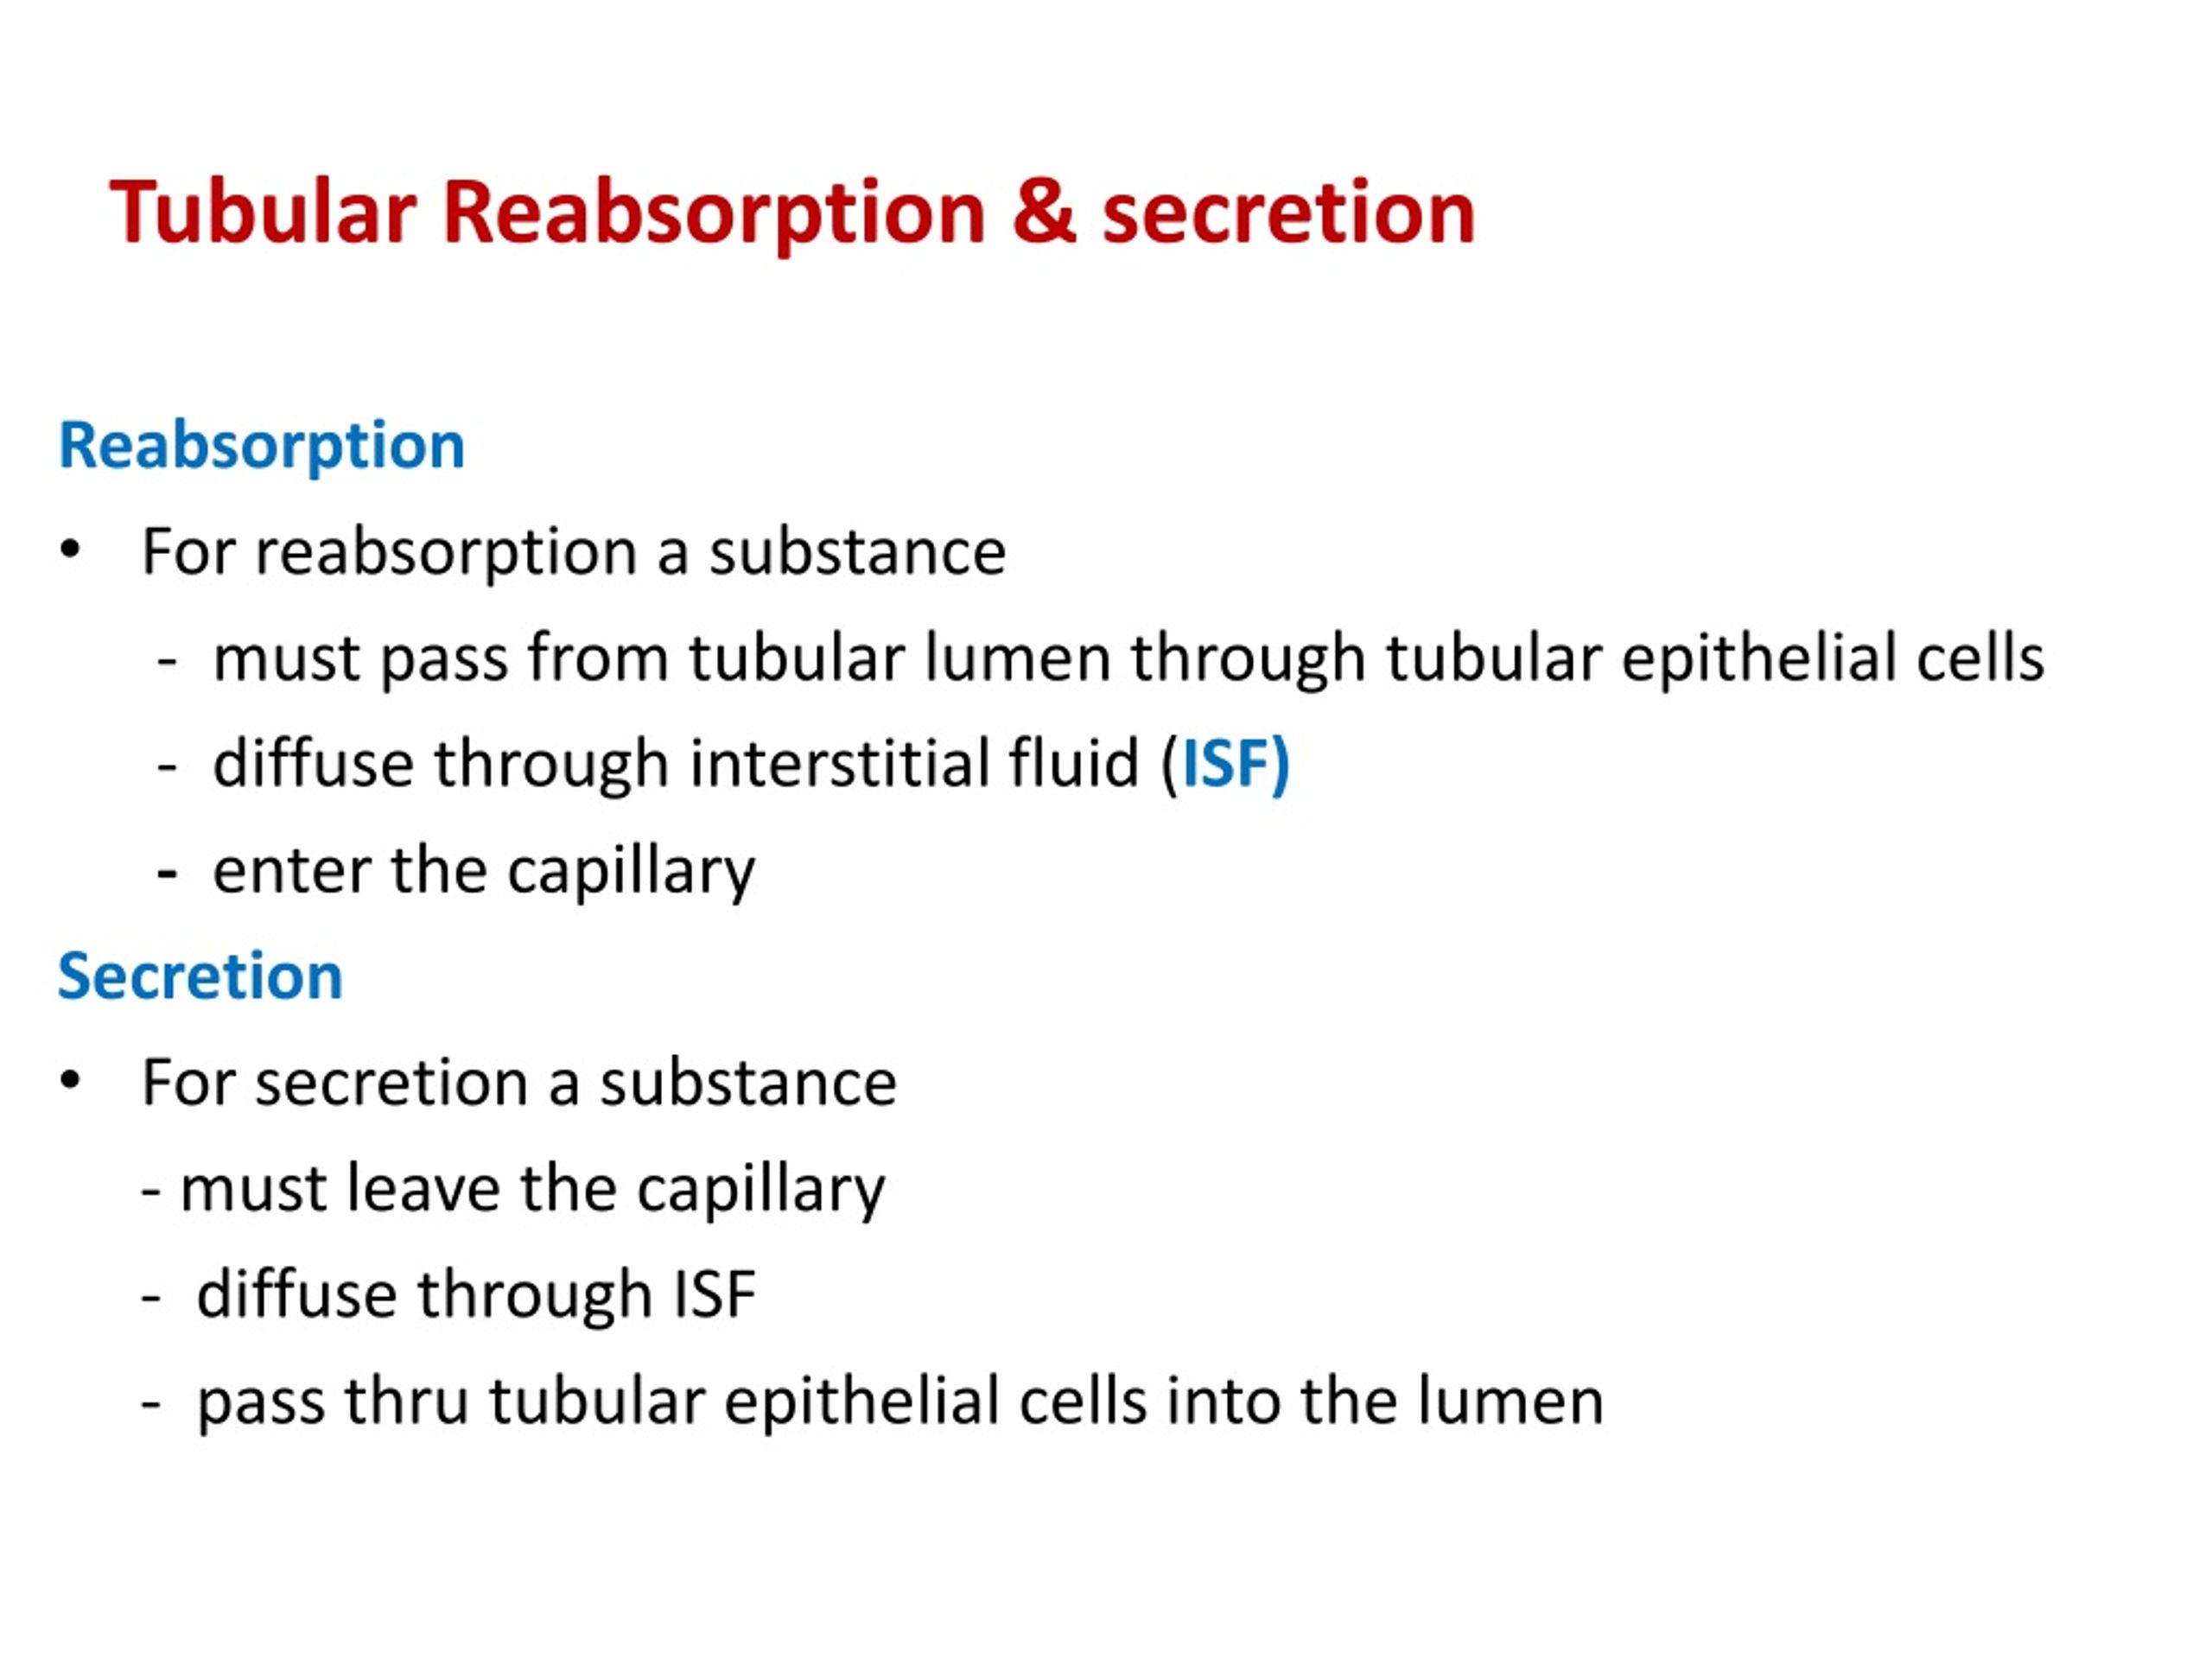 Ppt Urinary System L Tubular Reabsorption Secretion Powerpoint Presentation Id